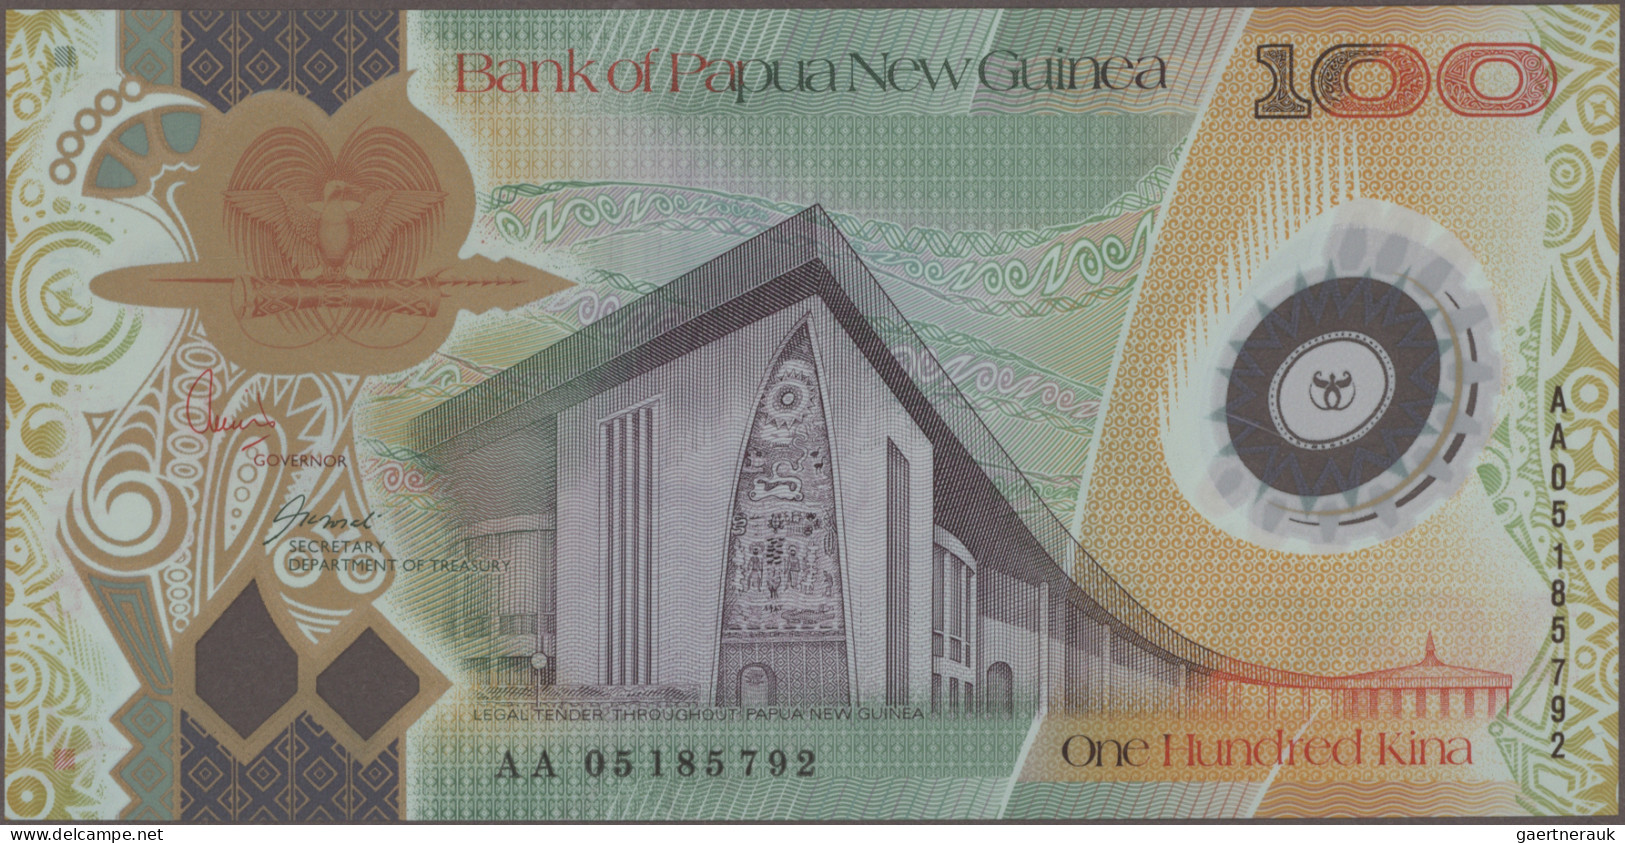 Papua New Guinea: Bank Of Papua New Guinea, Lot With 22 Banknotes, Series 2000-2 - Papua-Neuguinea